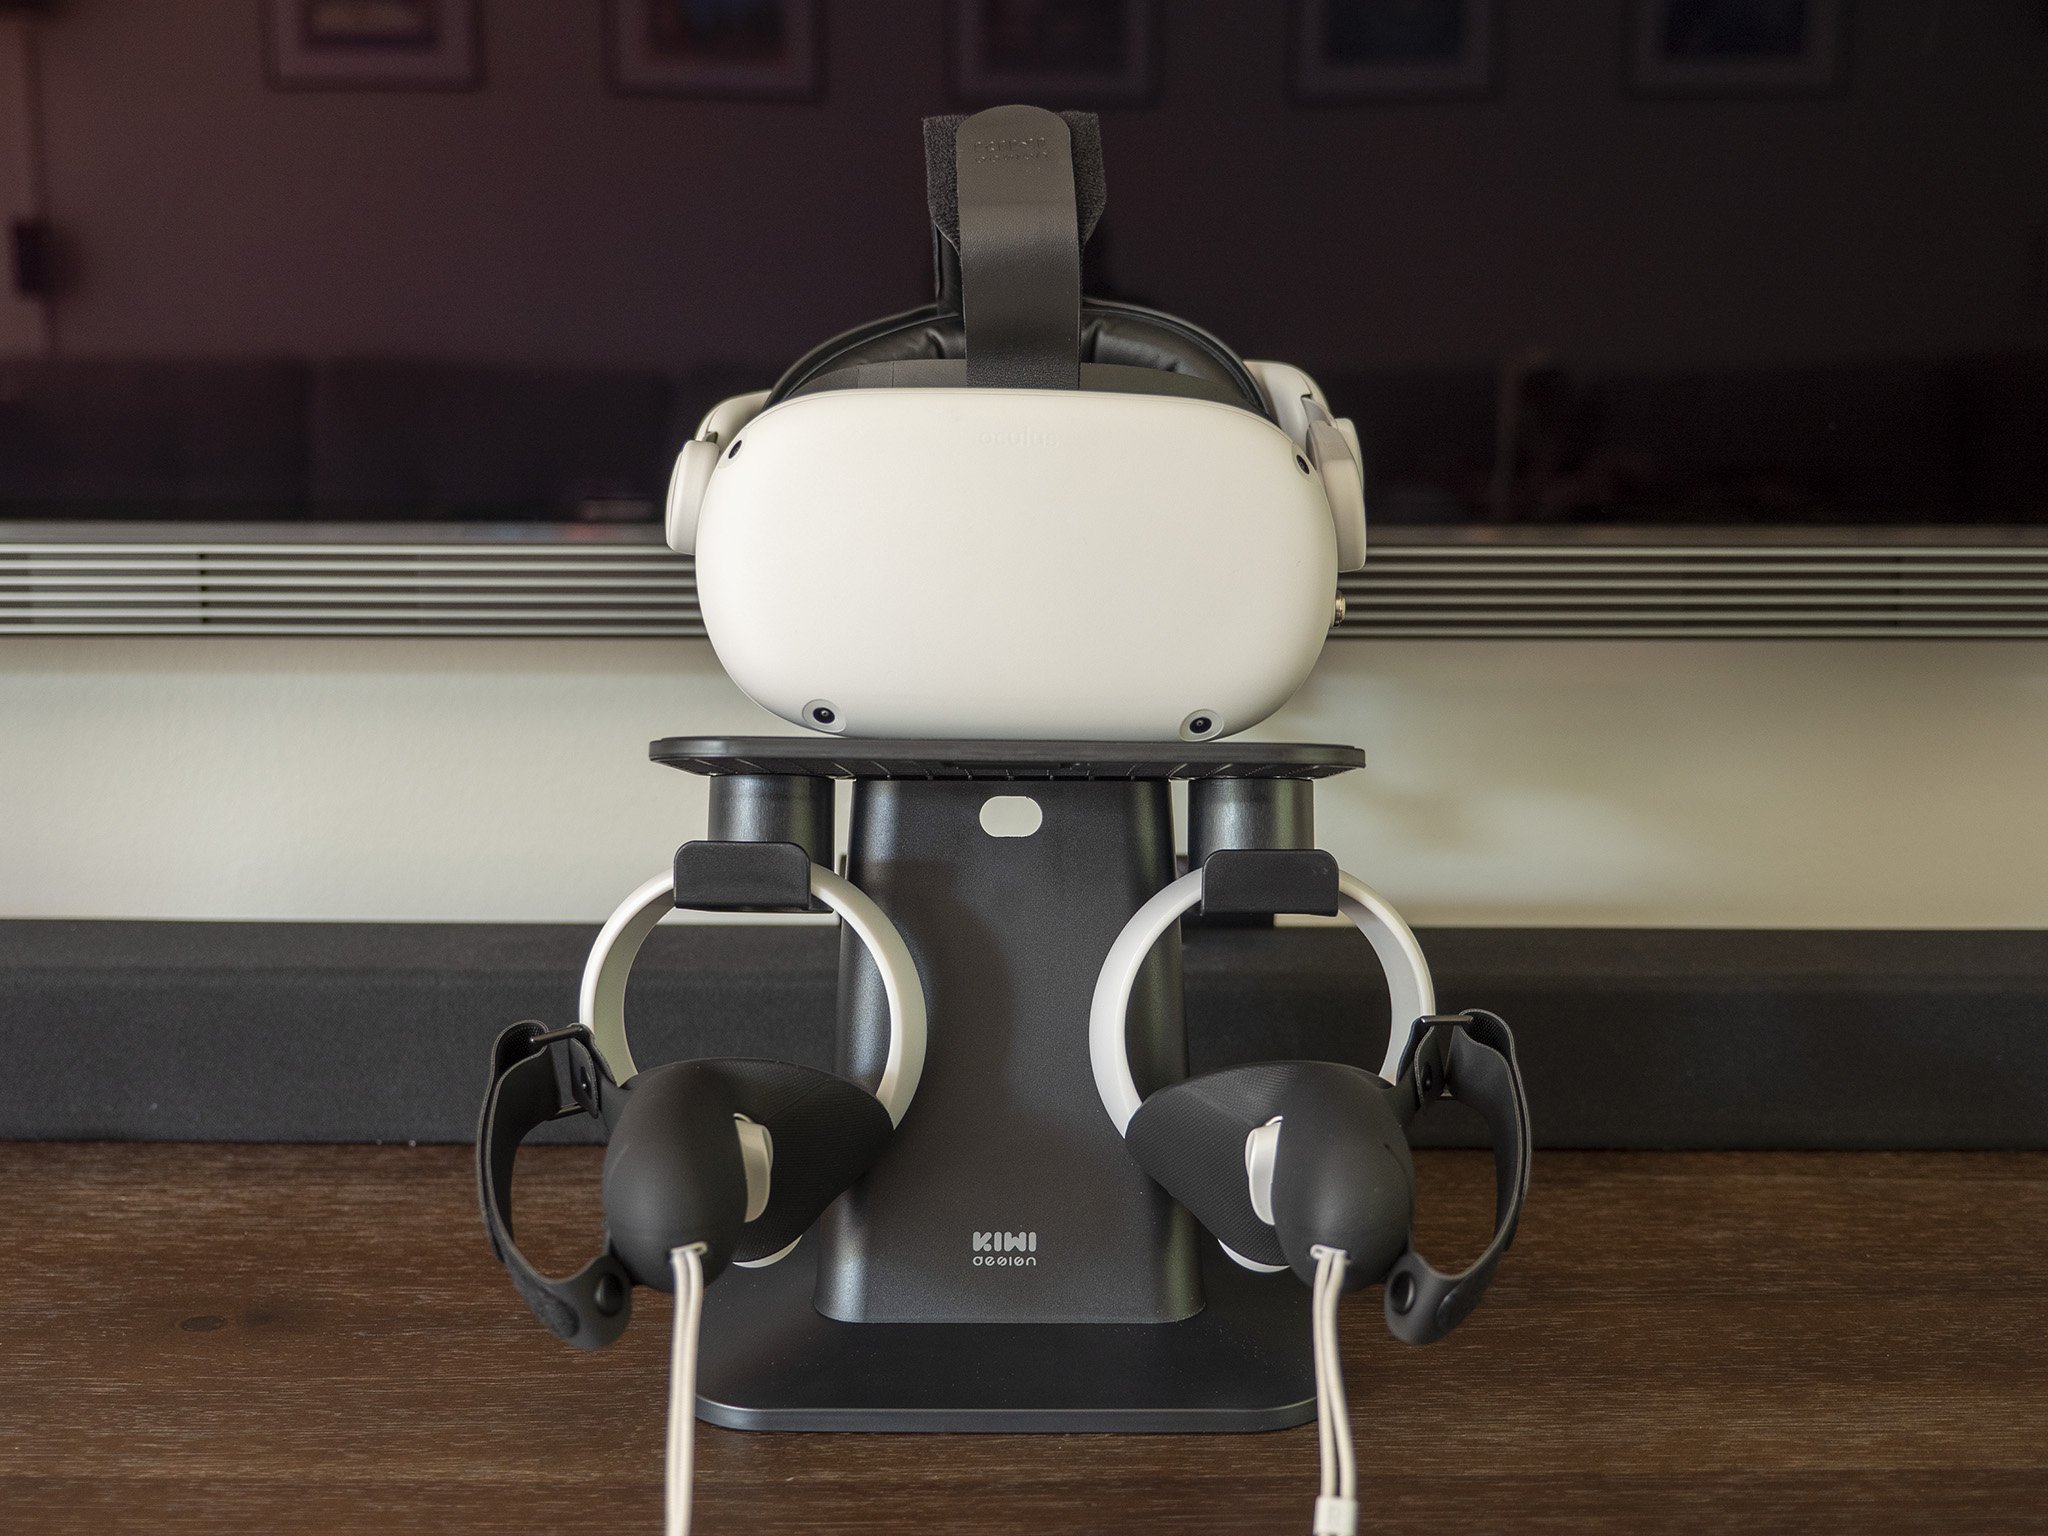 KIWI Design Oculus Quest Head Strap Review - Oculus Quest Play